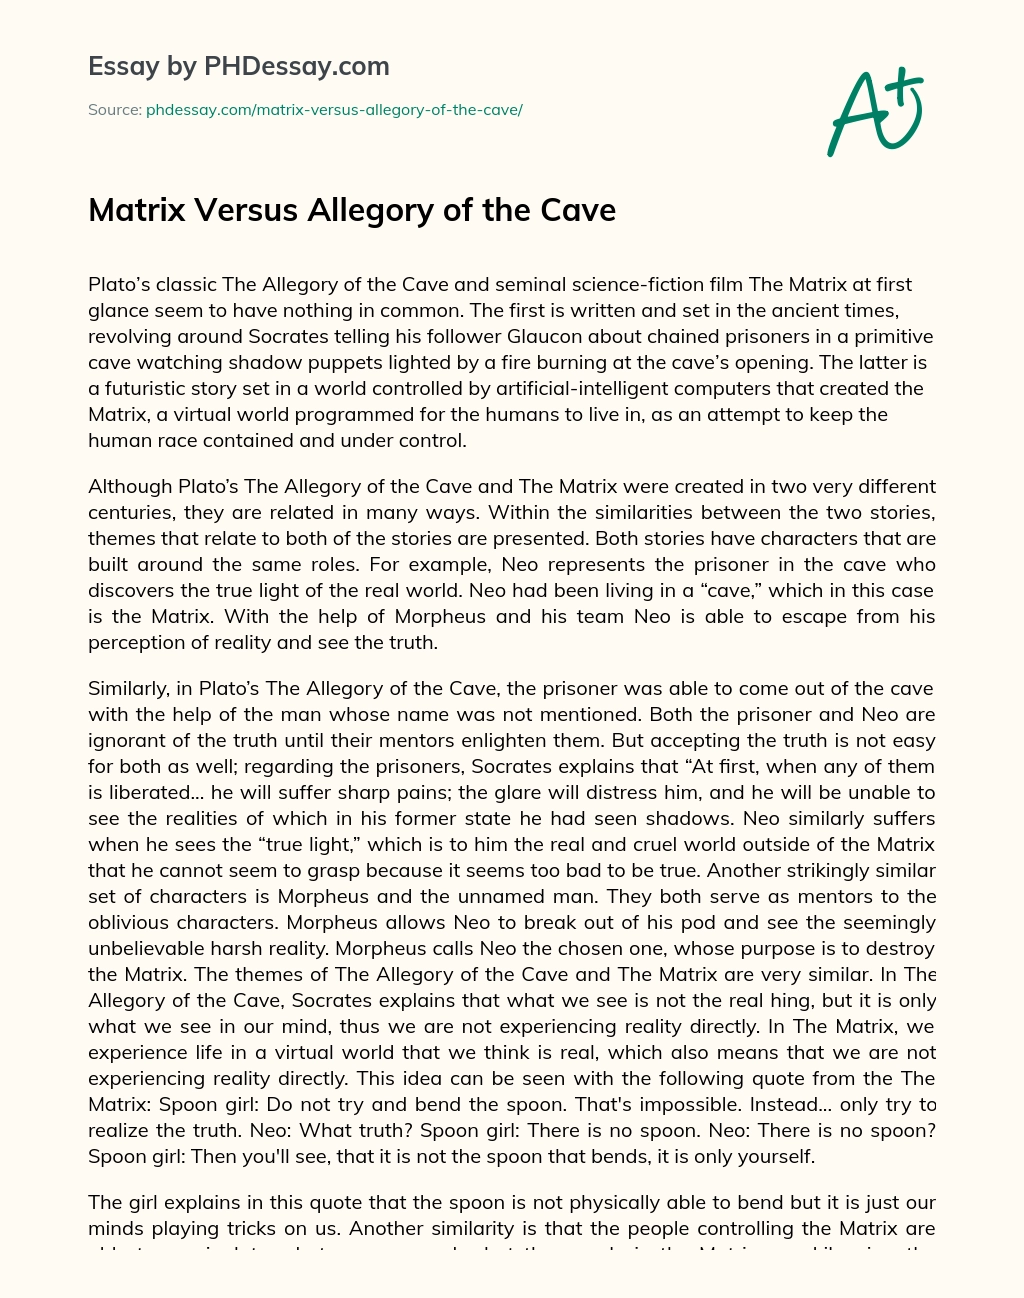 Matrix Versus Allegory of the Cave essay